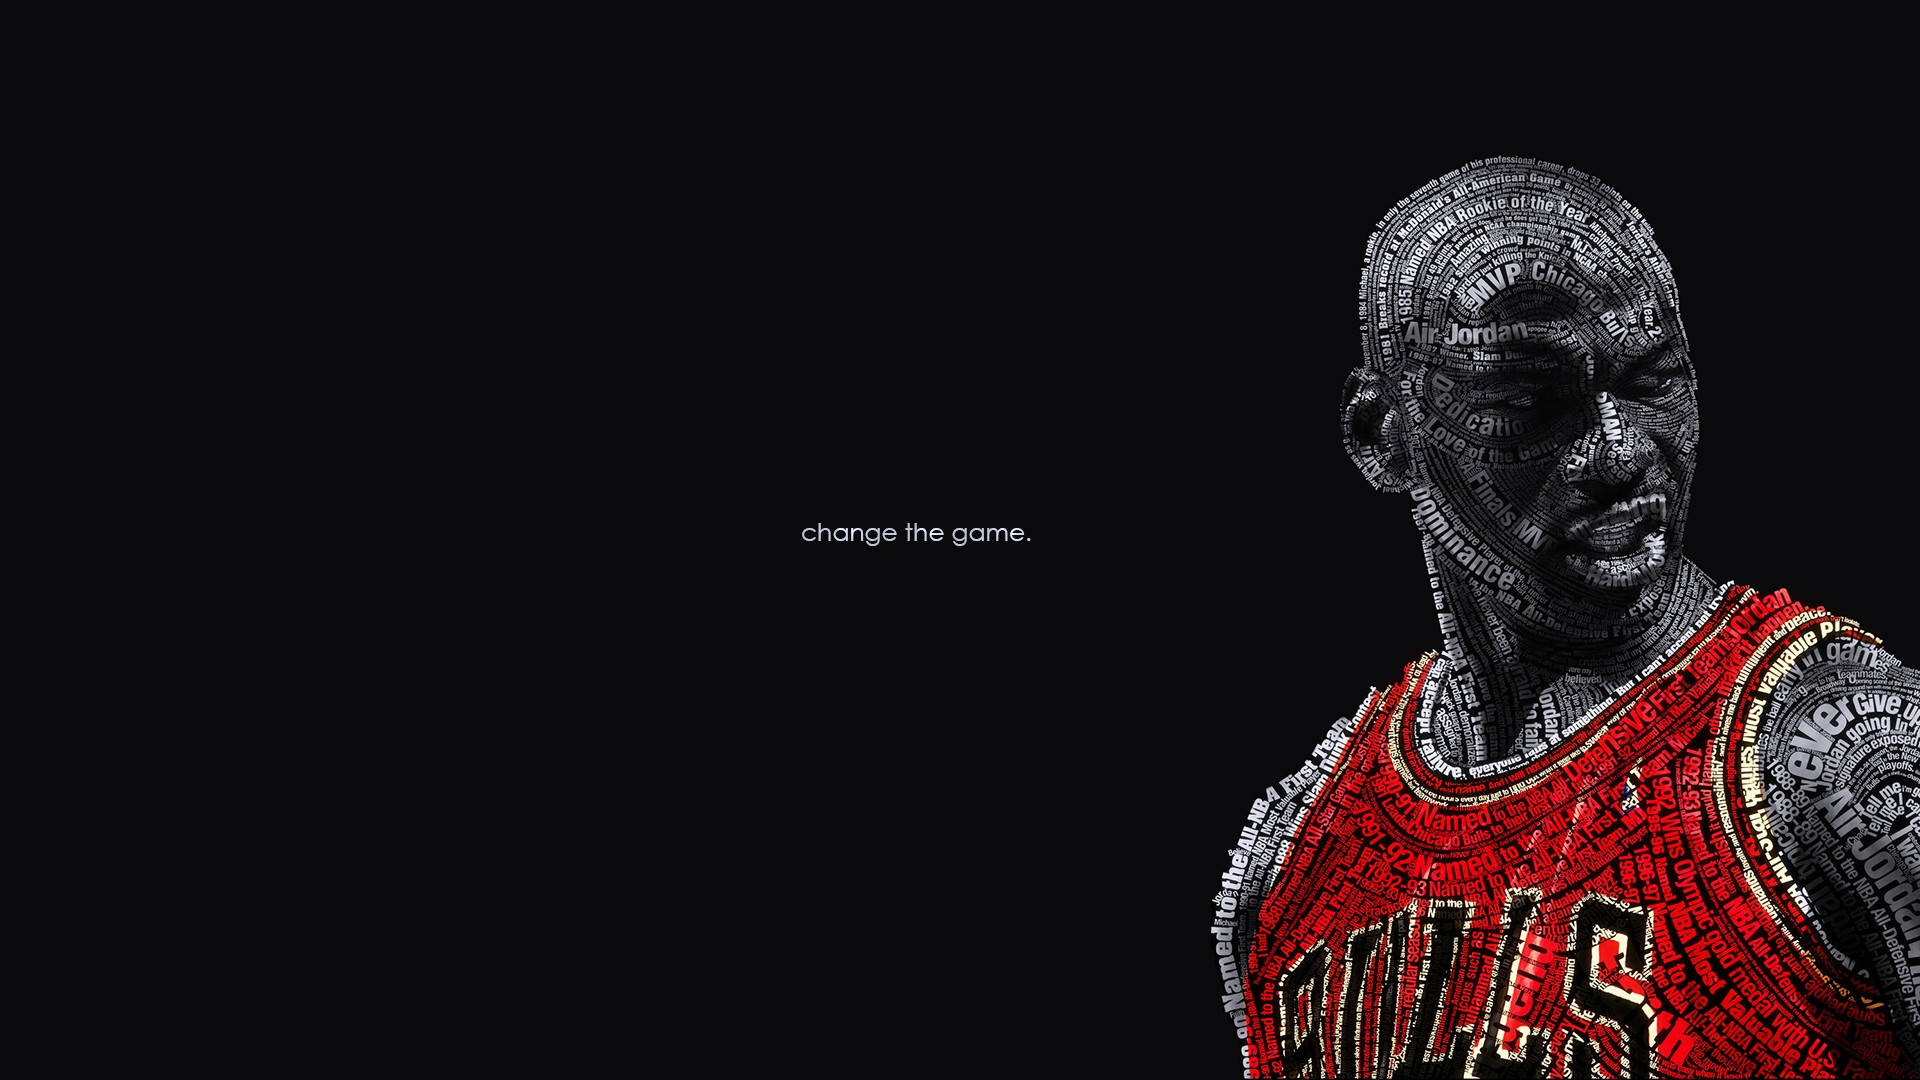 Michael Jordan Change The Game Picture